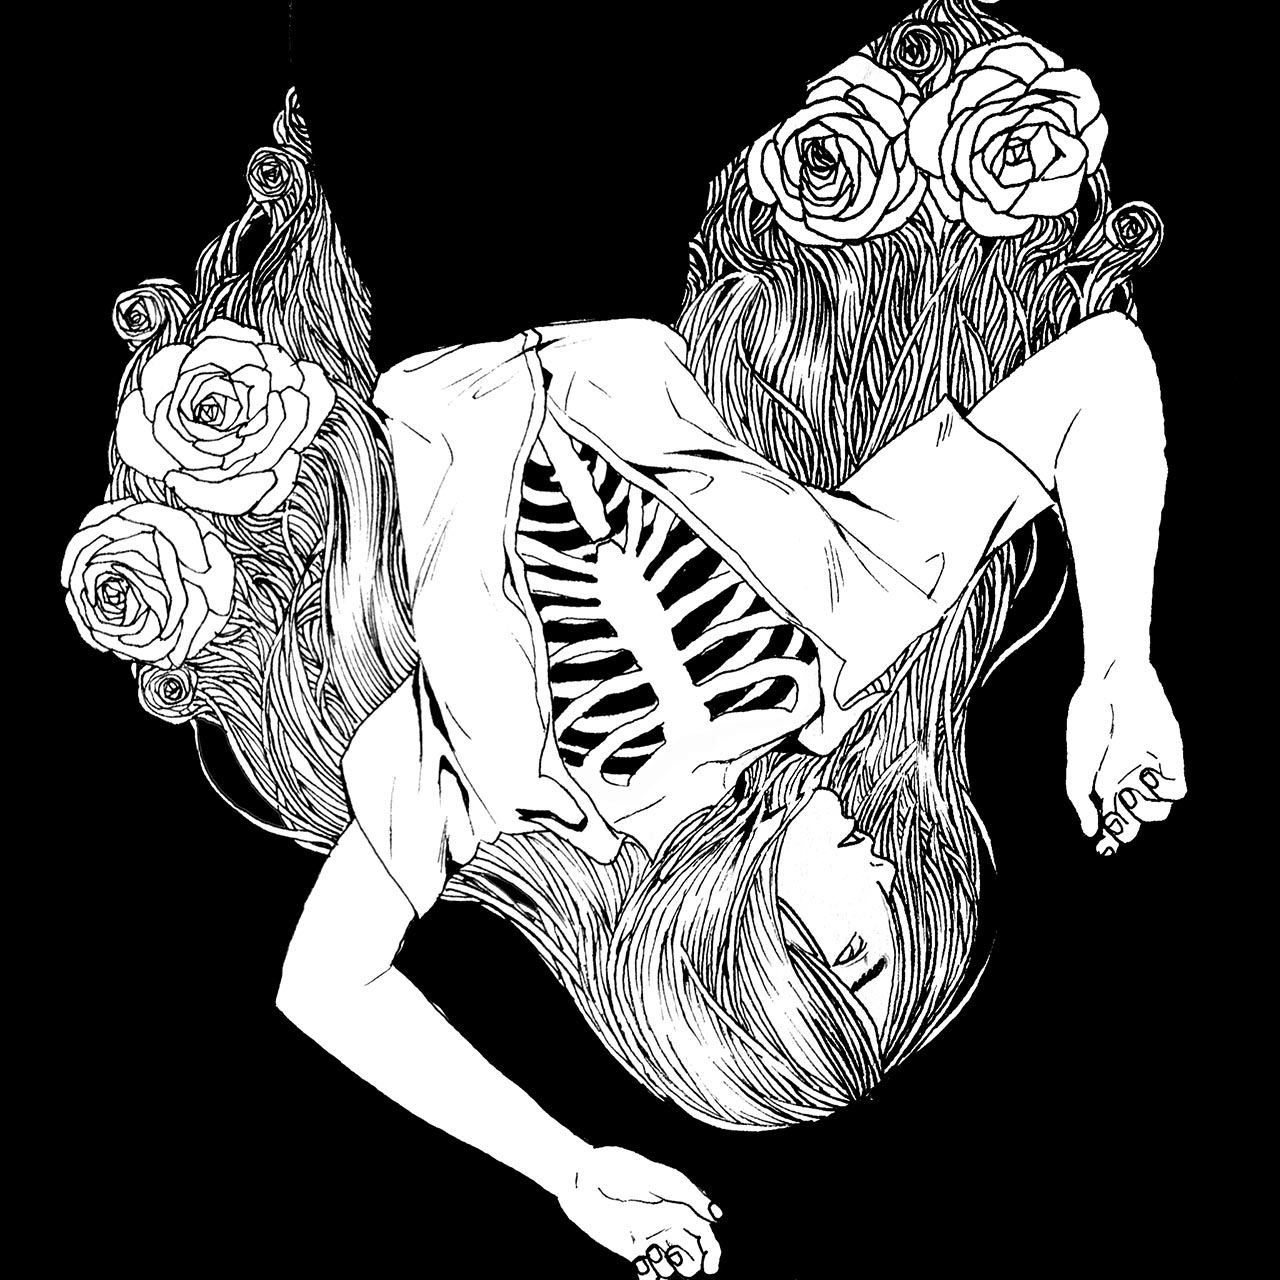 Illustration of girl with flowers in hair and visible ribcage Illustration av kvinna med blommor i håret och revbenen synliga